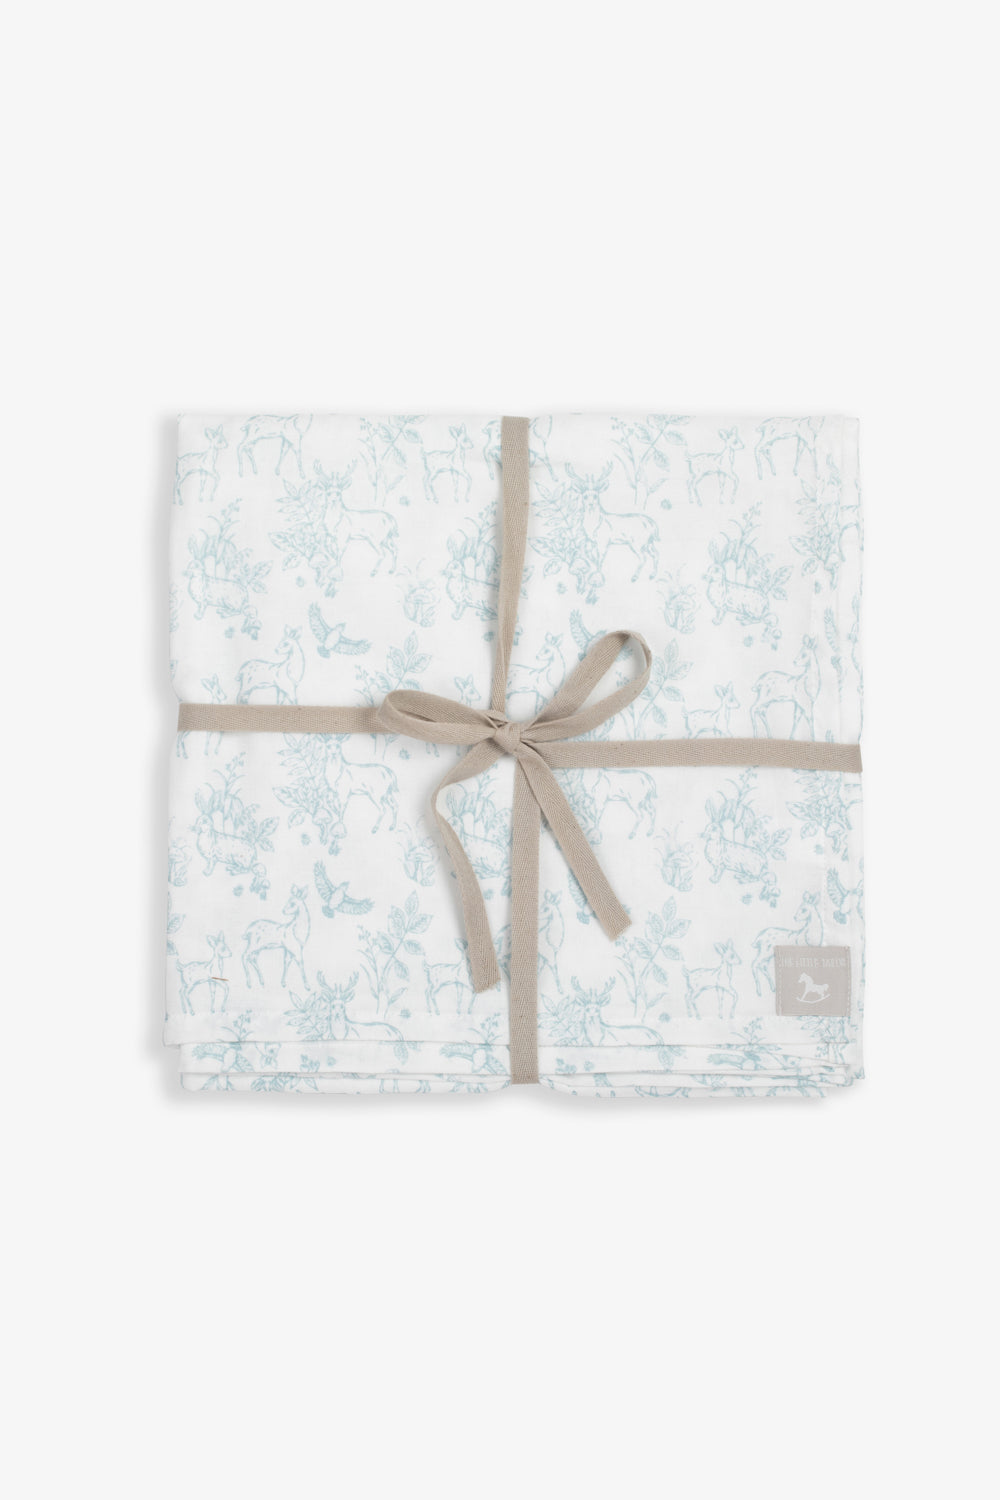 Large Muslin Blanket/Scarf, sky blue woodland print